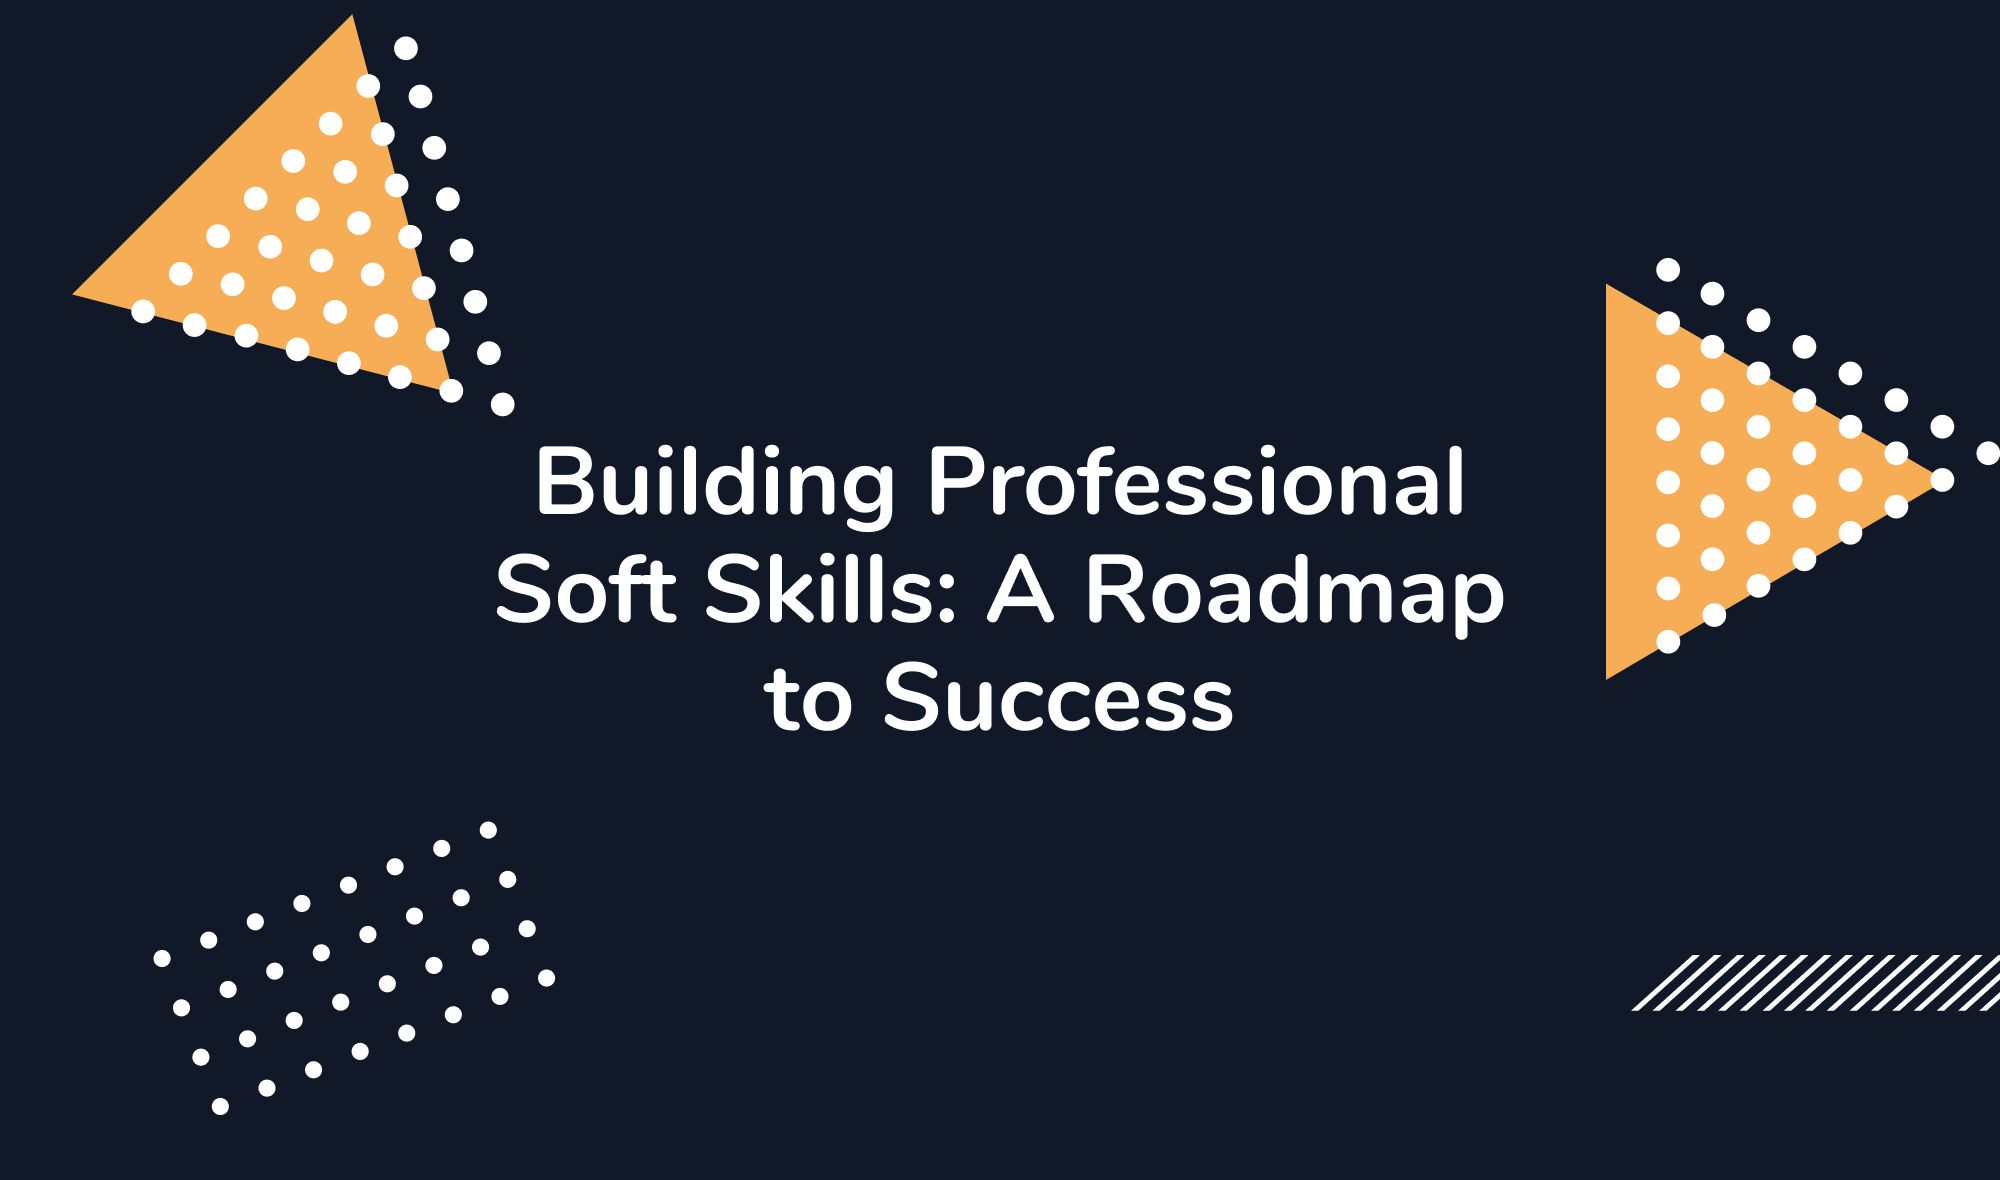 Building Professional Soft Skills: A Roadmap to Success